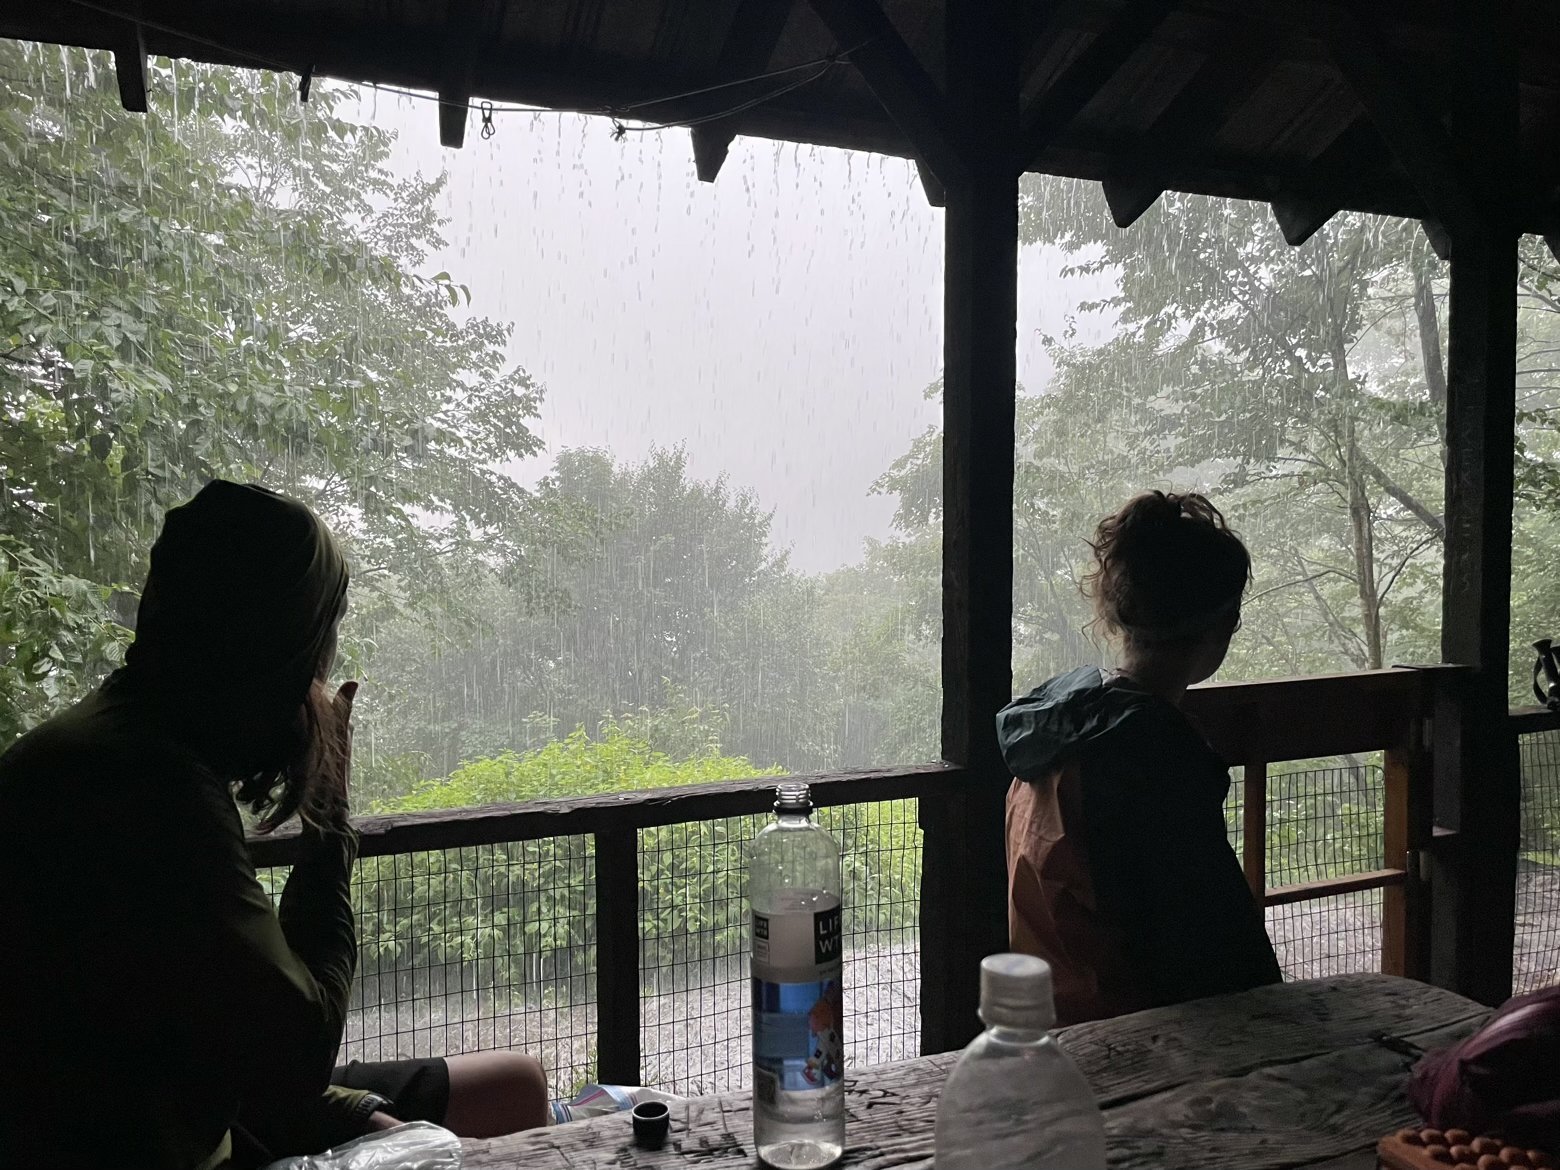 Morning entertainment: rain